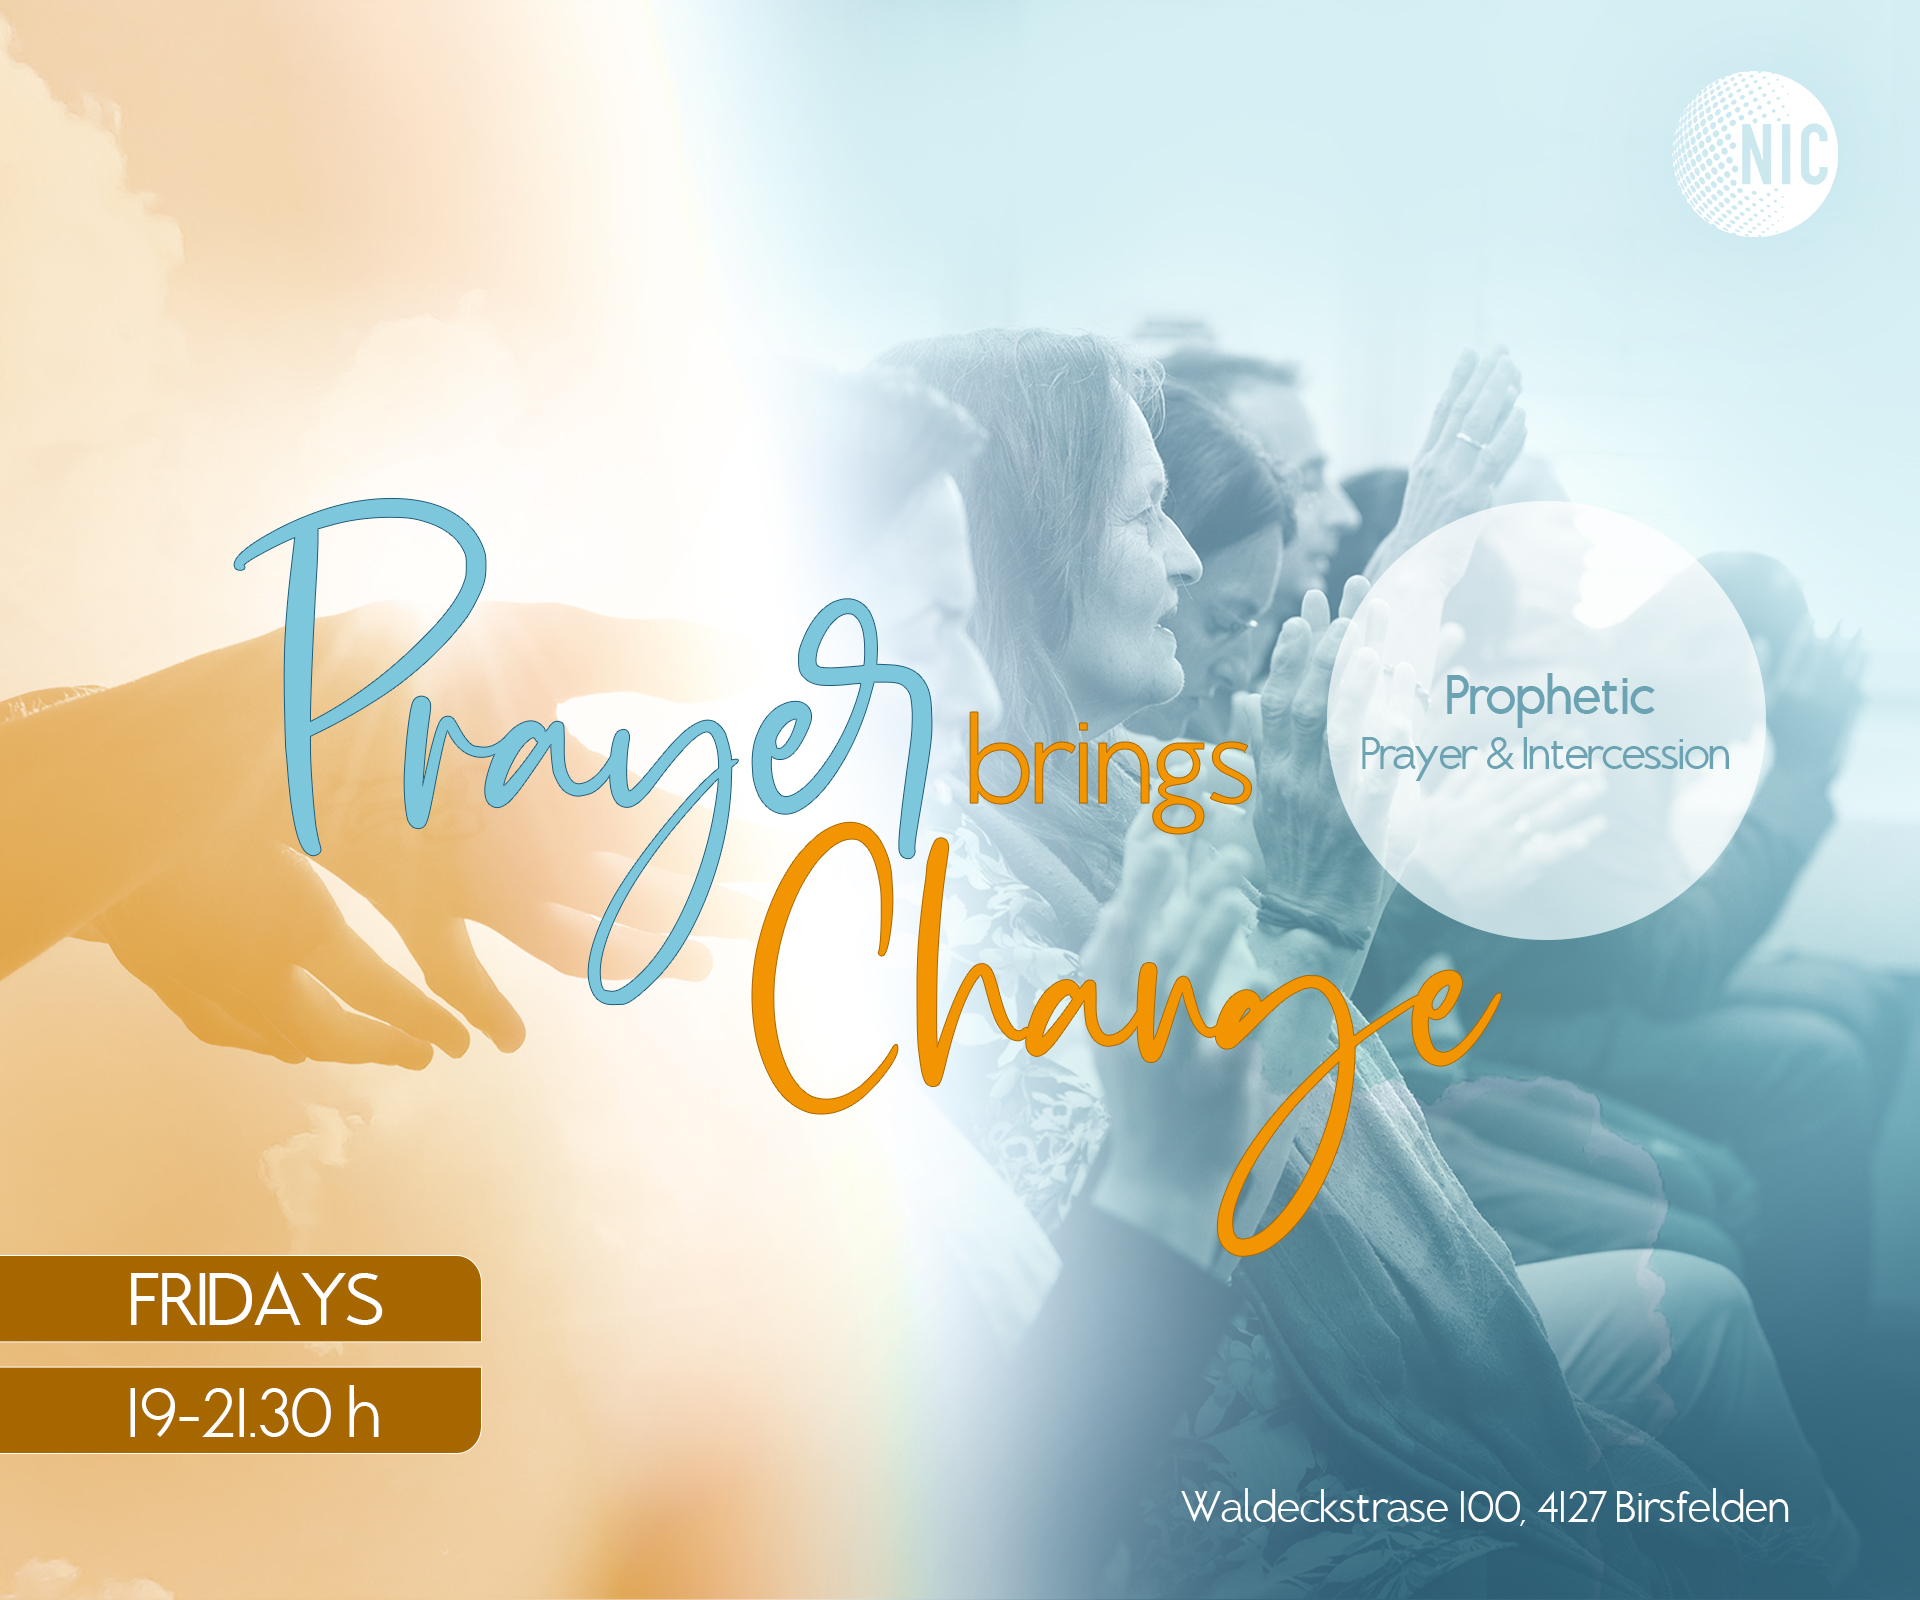 Prayer brings change, prophetic prayer and intercession